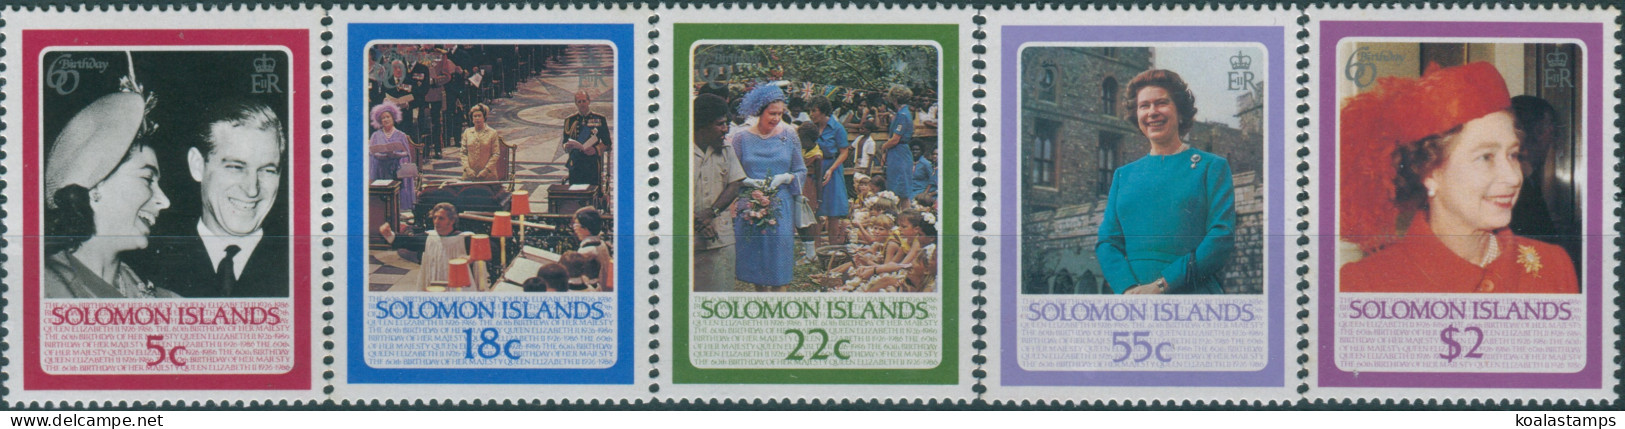 Solomon Islands 1986 SG562-566 QEII Birthday Set MNH - Salomon (Iles 1978-...)